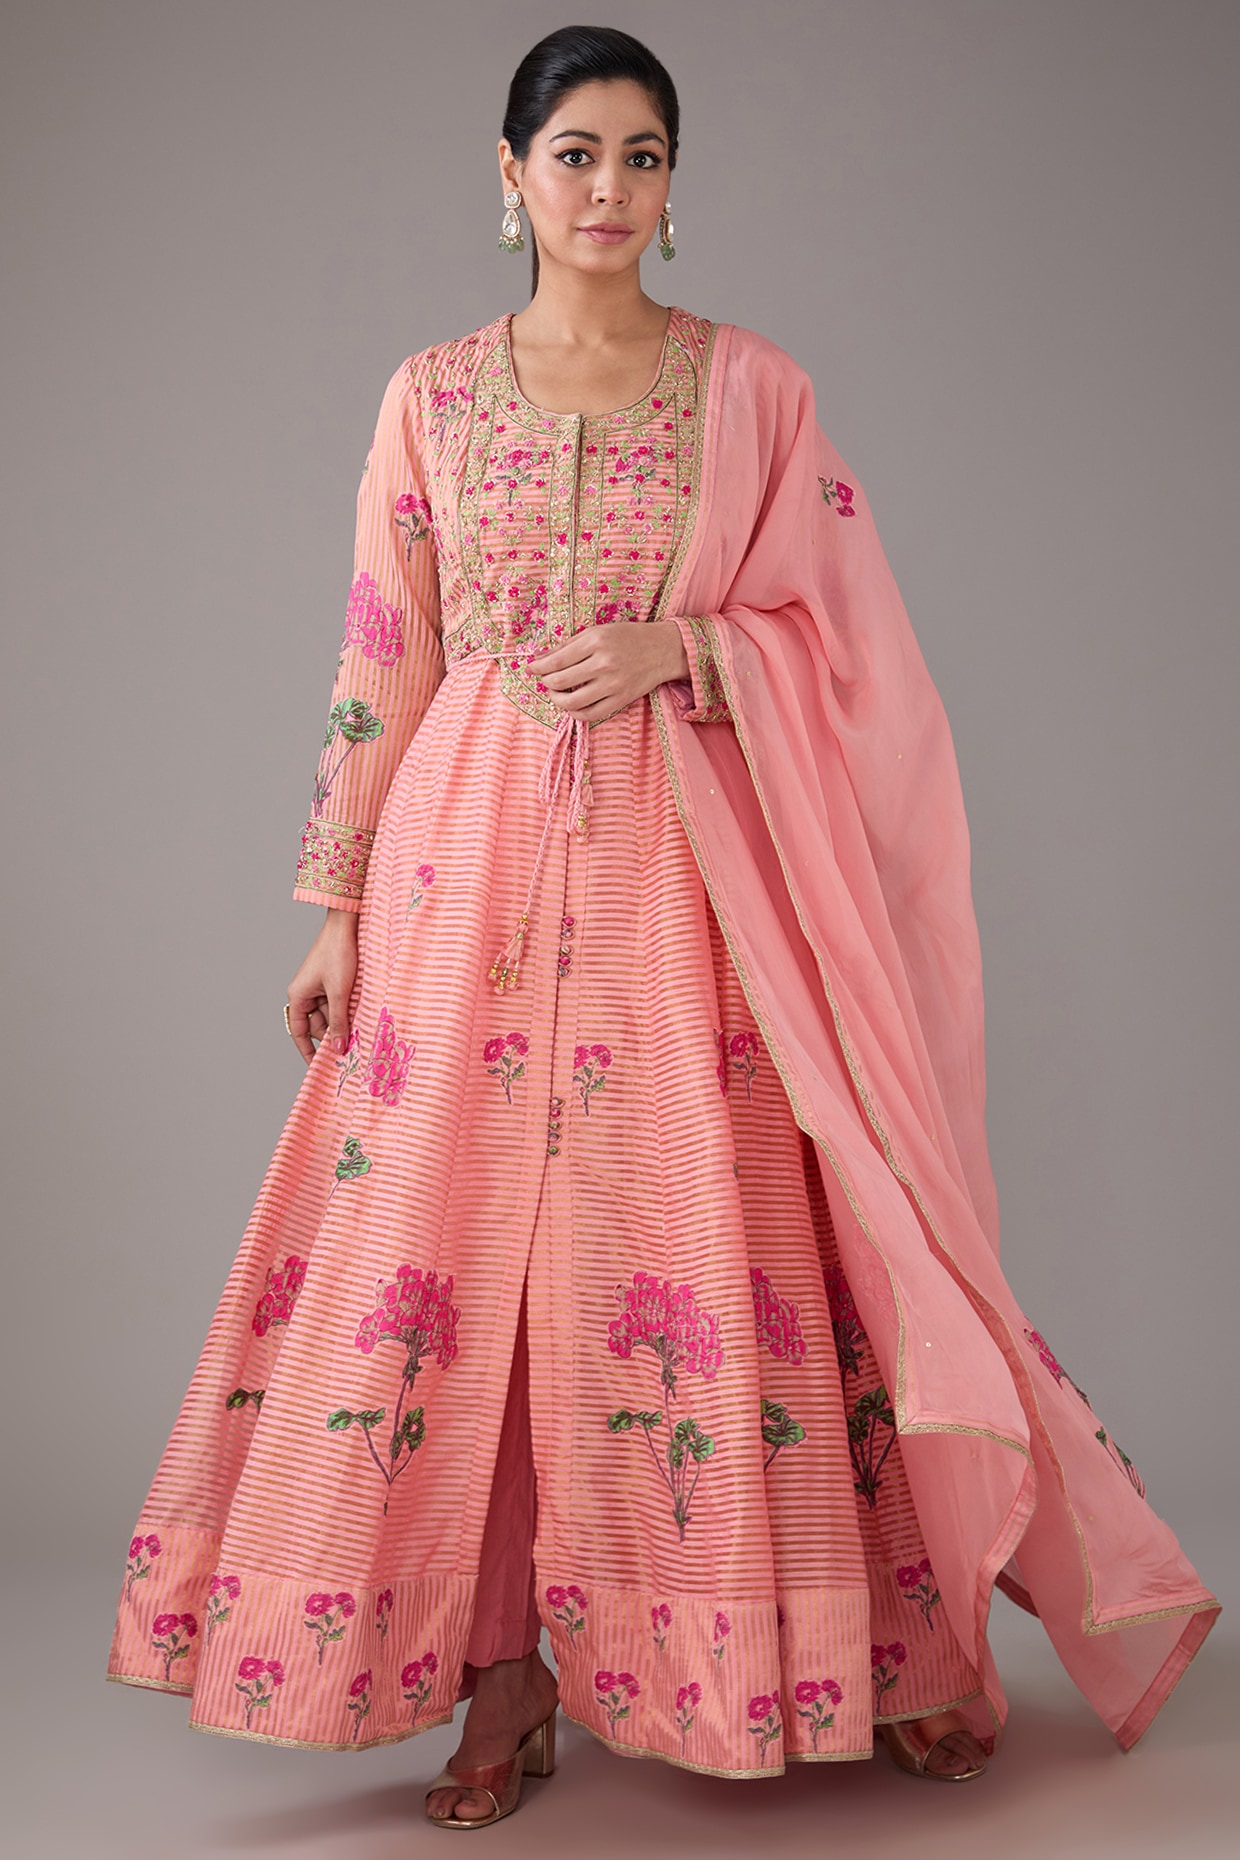 Dark blue Anarkali with pink pattu border and green dupatta | Indian gowns  dresses, Long gown design, Kids designer dresses